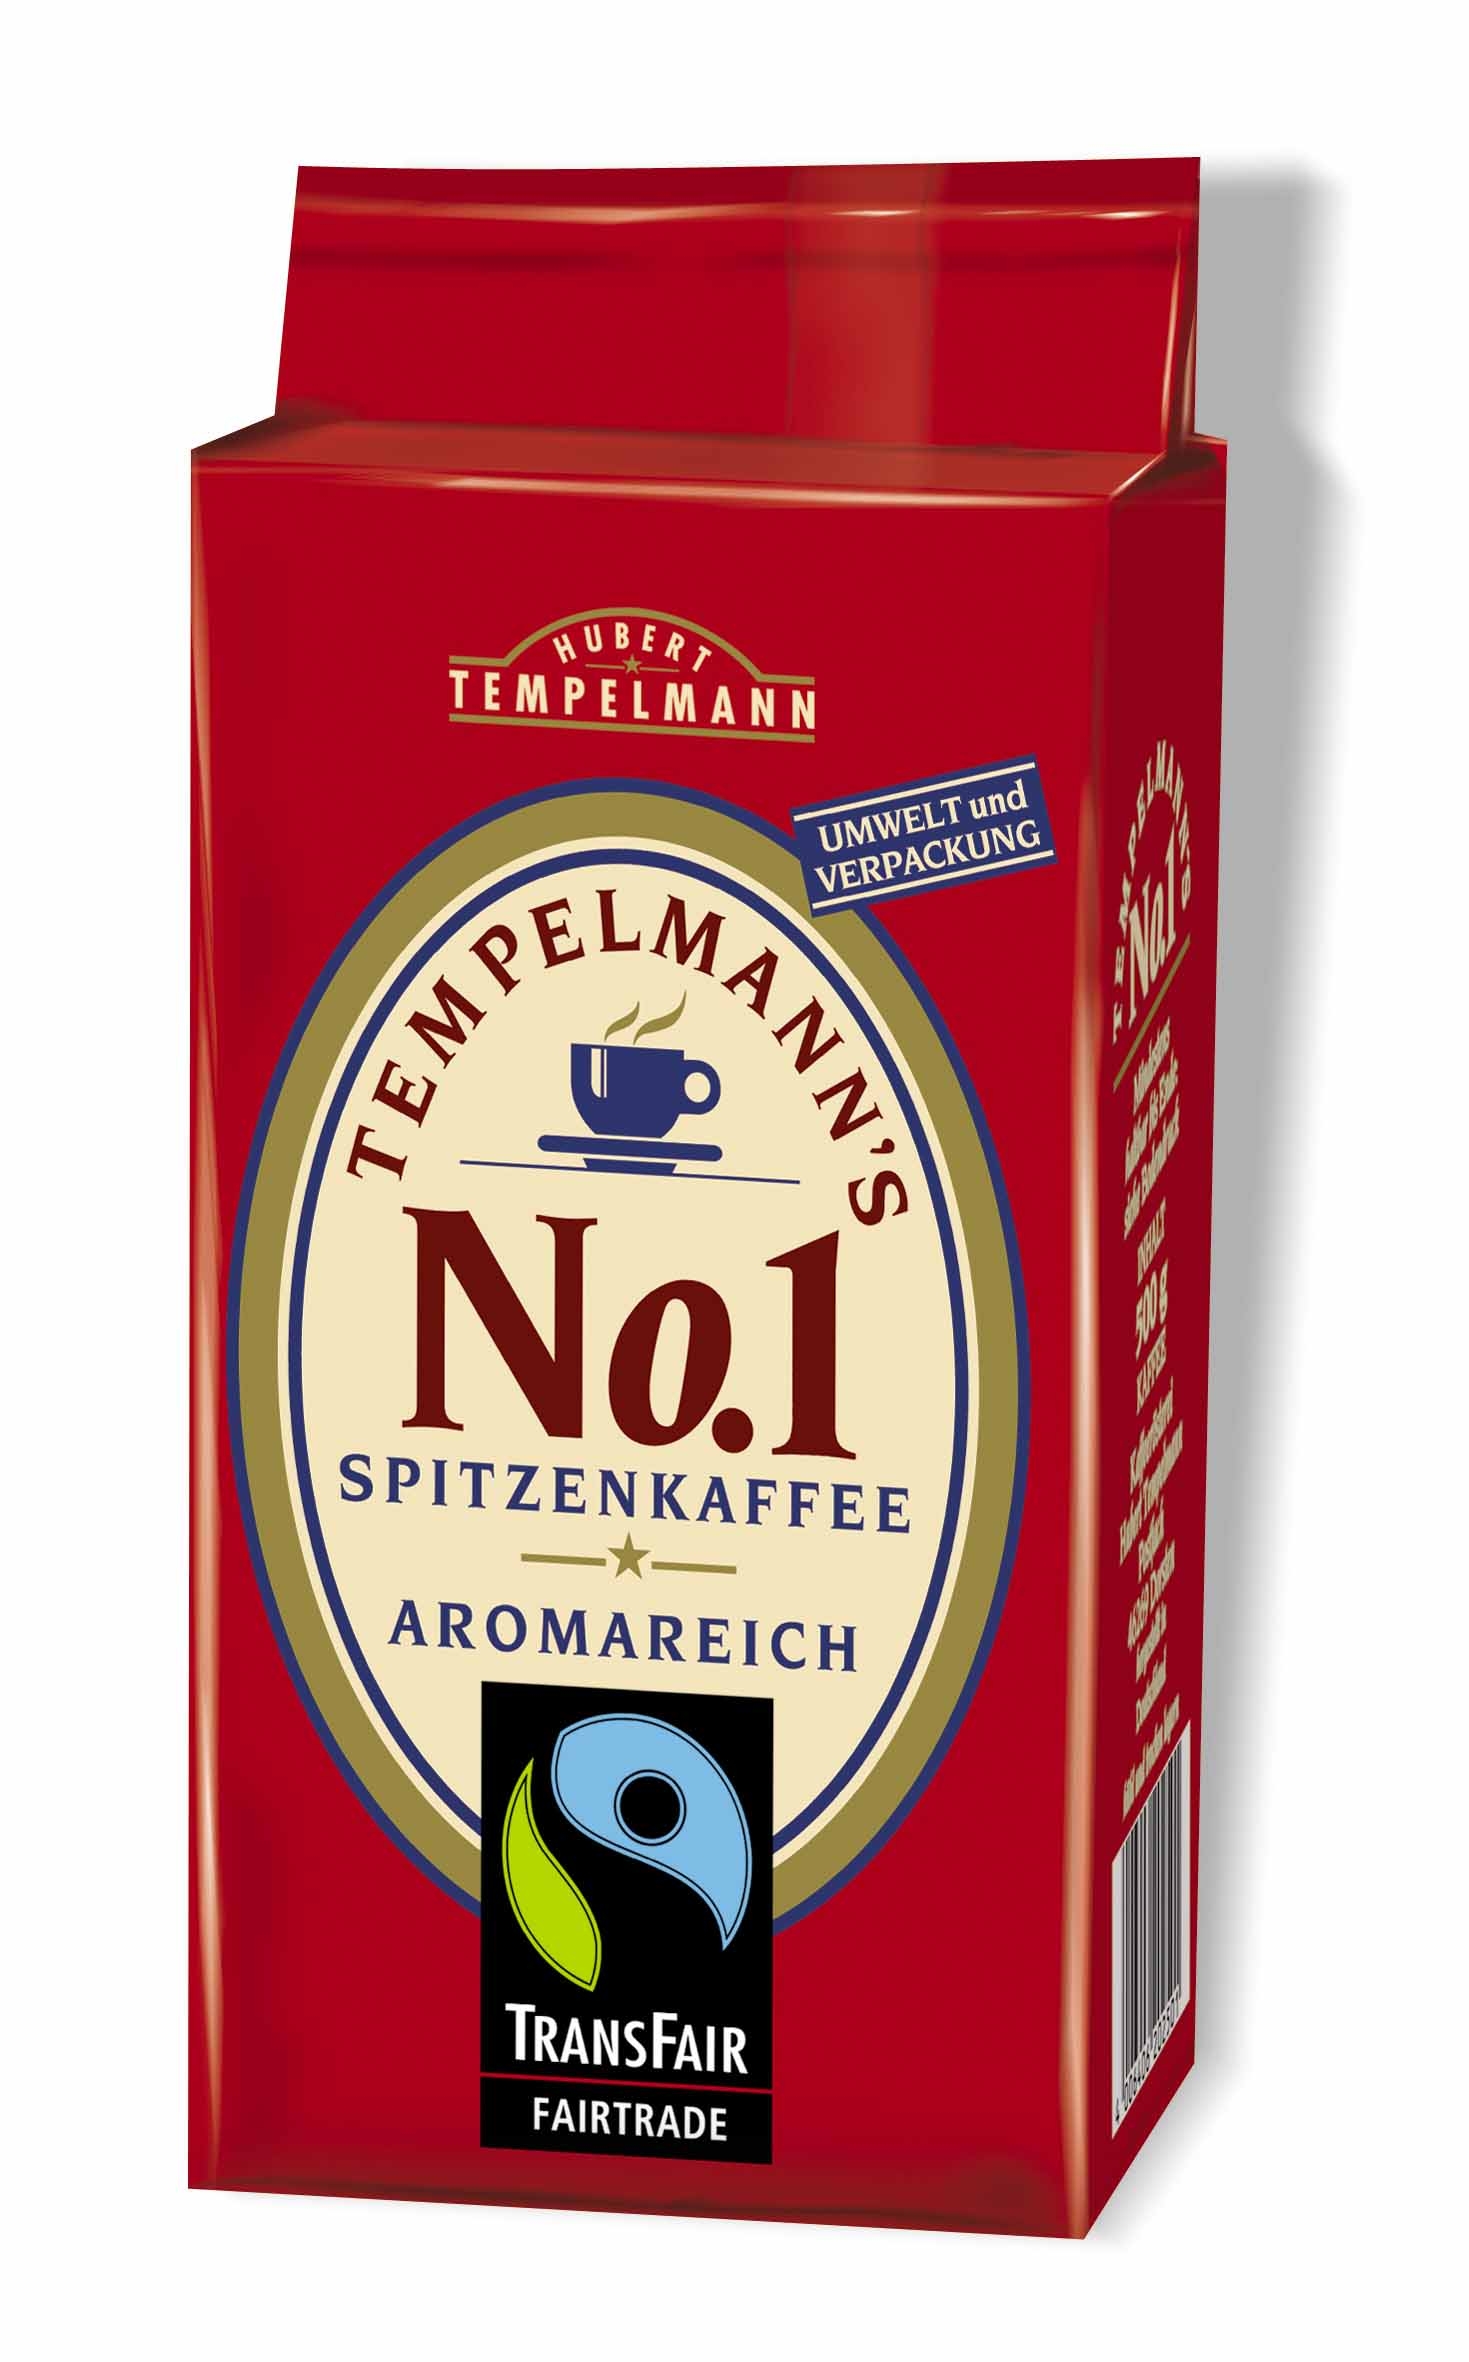 Tempelmann's No.1 Spitzenauslese-